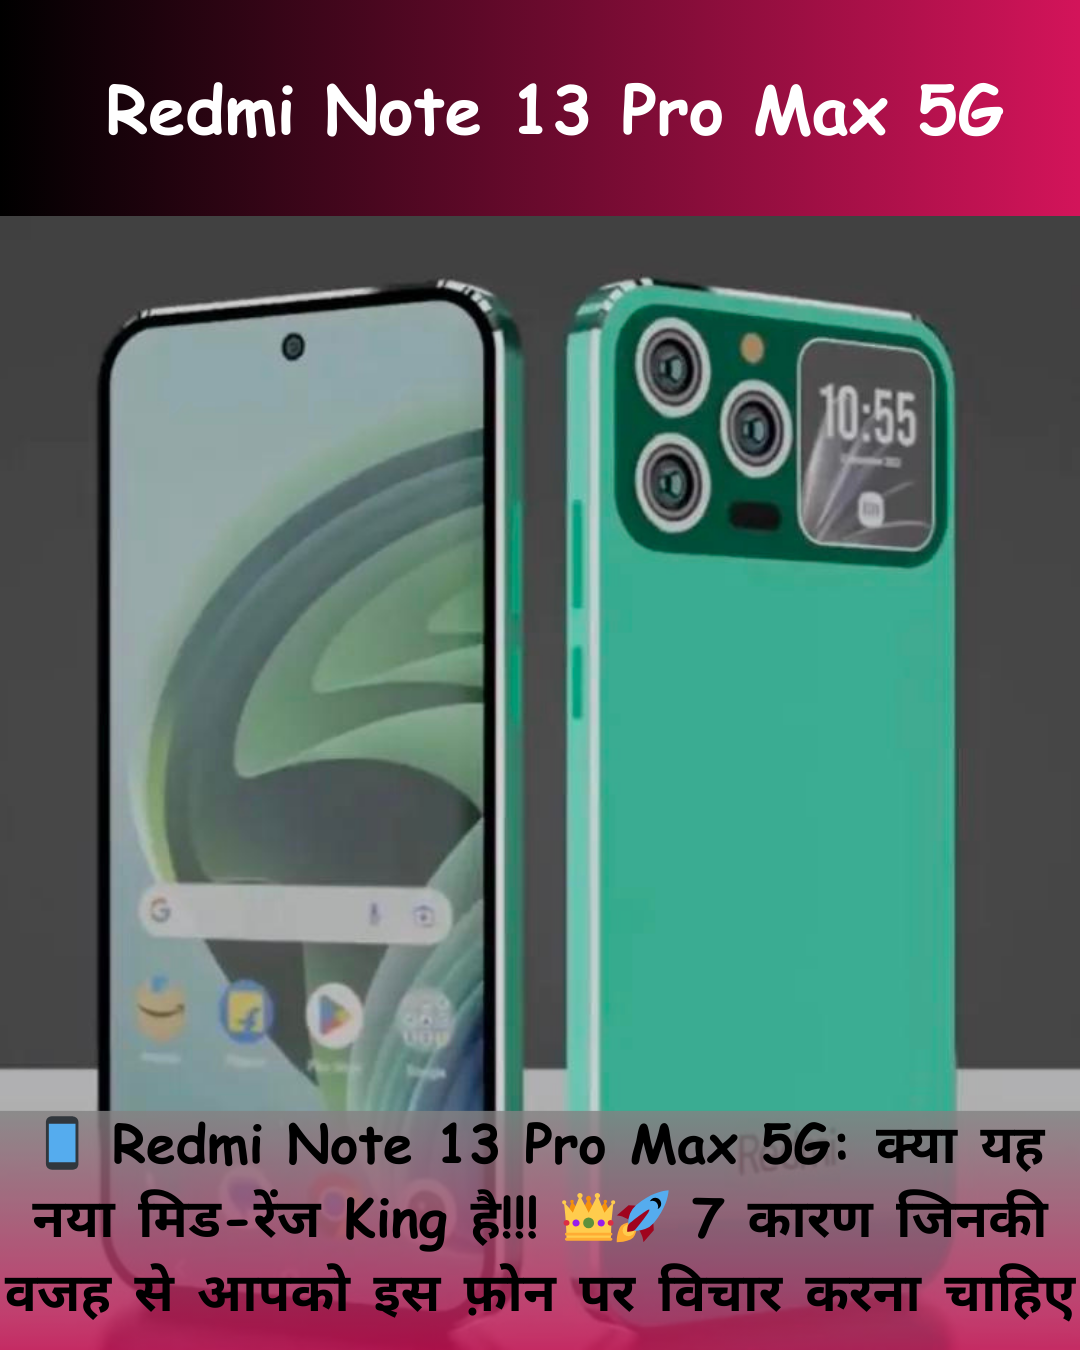 🔥 Redmi Note 13 Pro Max 5G: 25,000 से कम में 5G धमाका! 💥 रेडमी नोट 13 प्रो मैक्स 5G रिव्यू - Powerful, latest technology, and powerful performance! 🚀✨